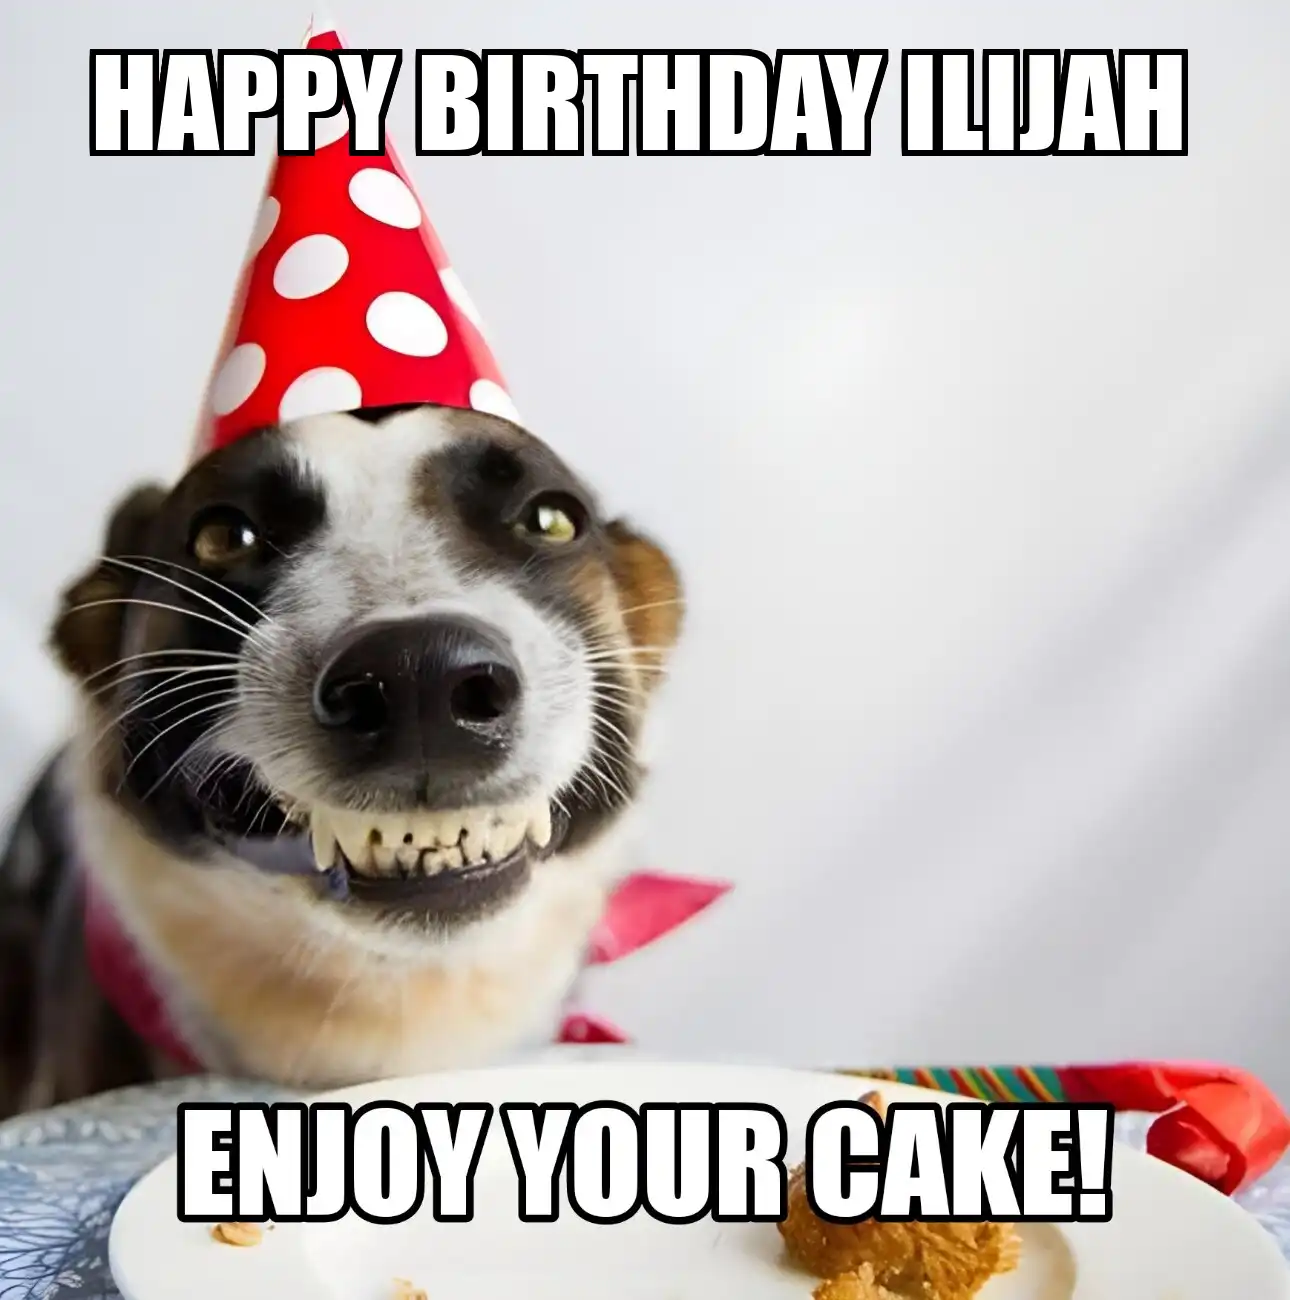 Happy Birthday Ilijah Enjoy Your Cake Dog Meme